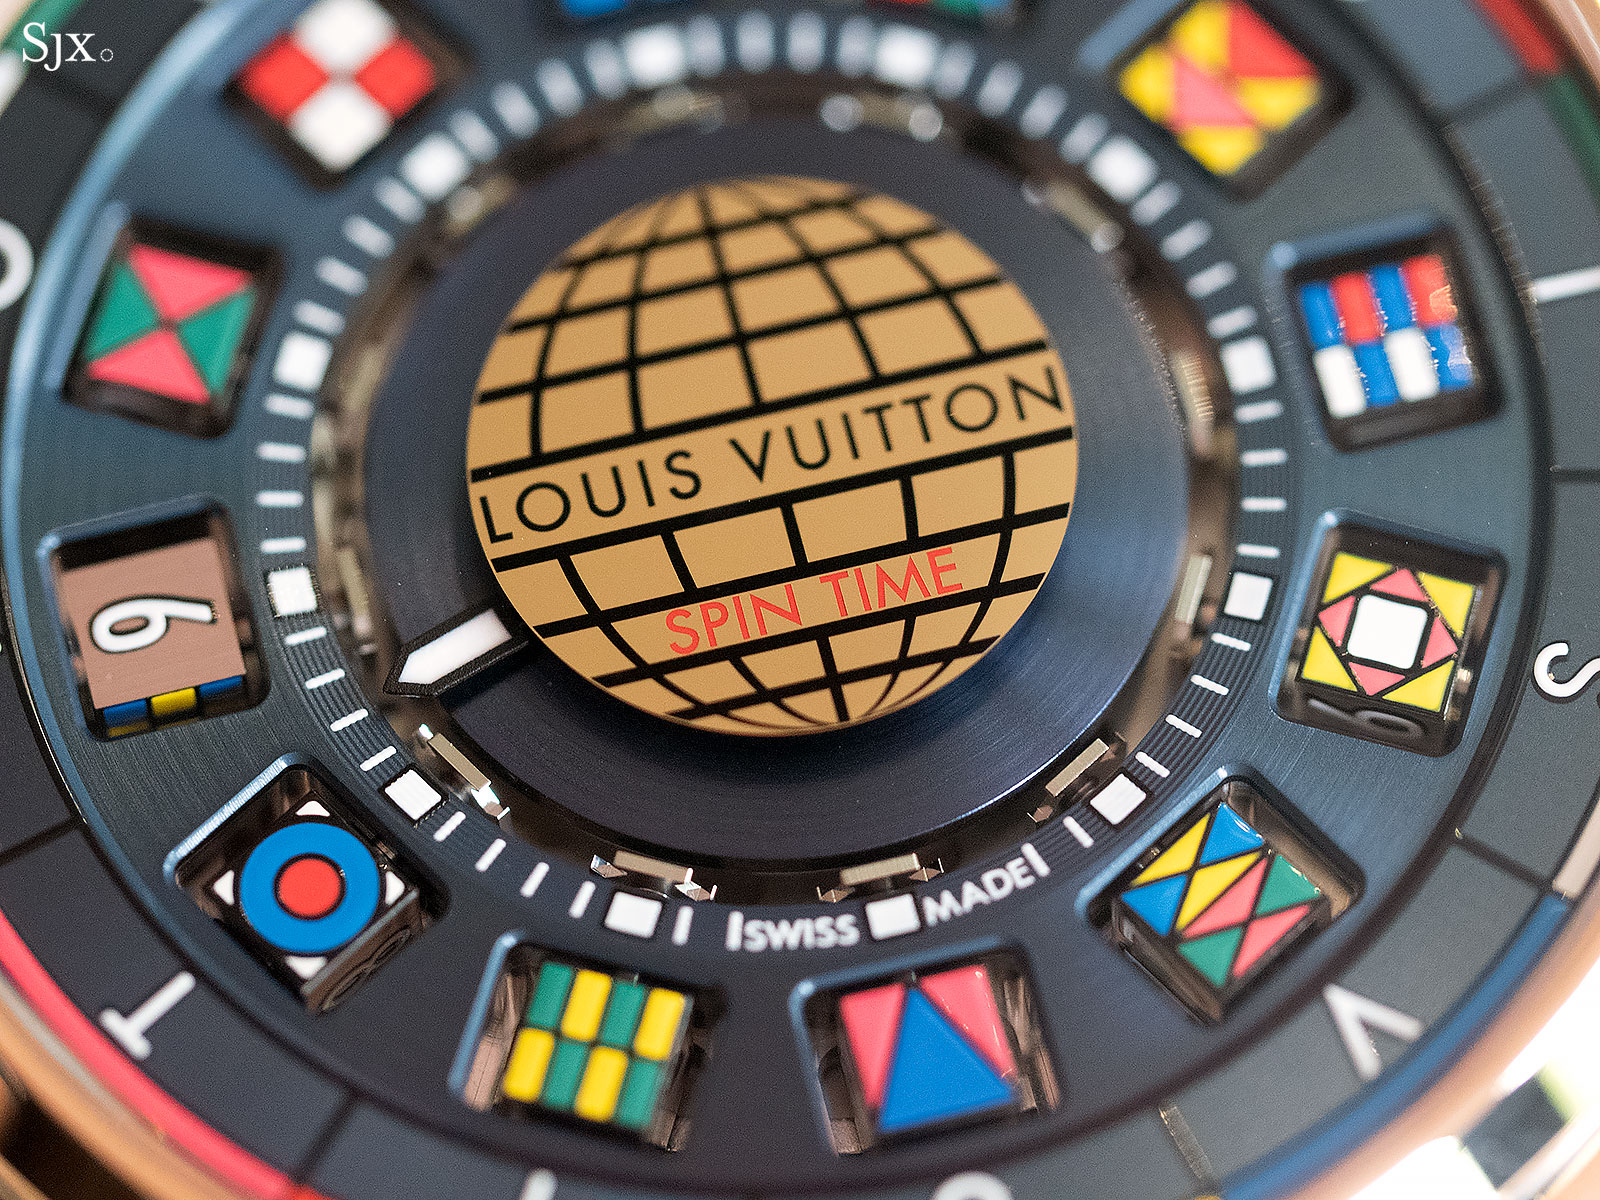 Louis Vuitton Escale Spin Time titanium gold 4